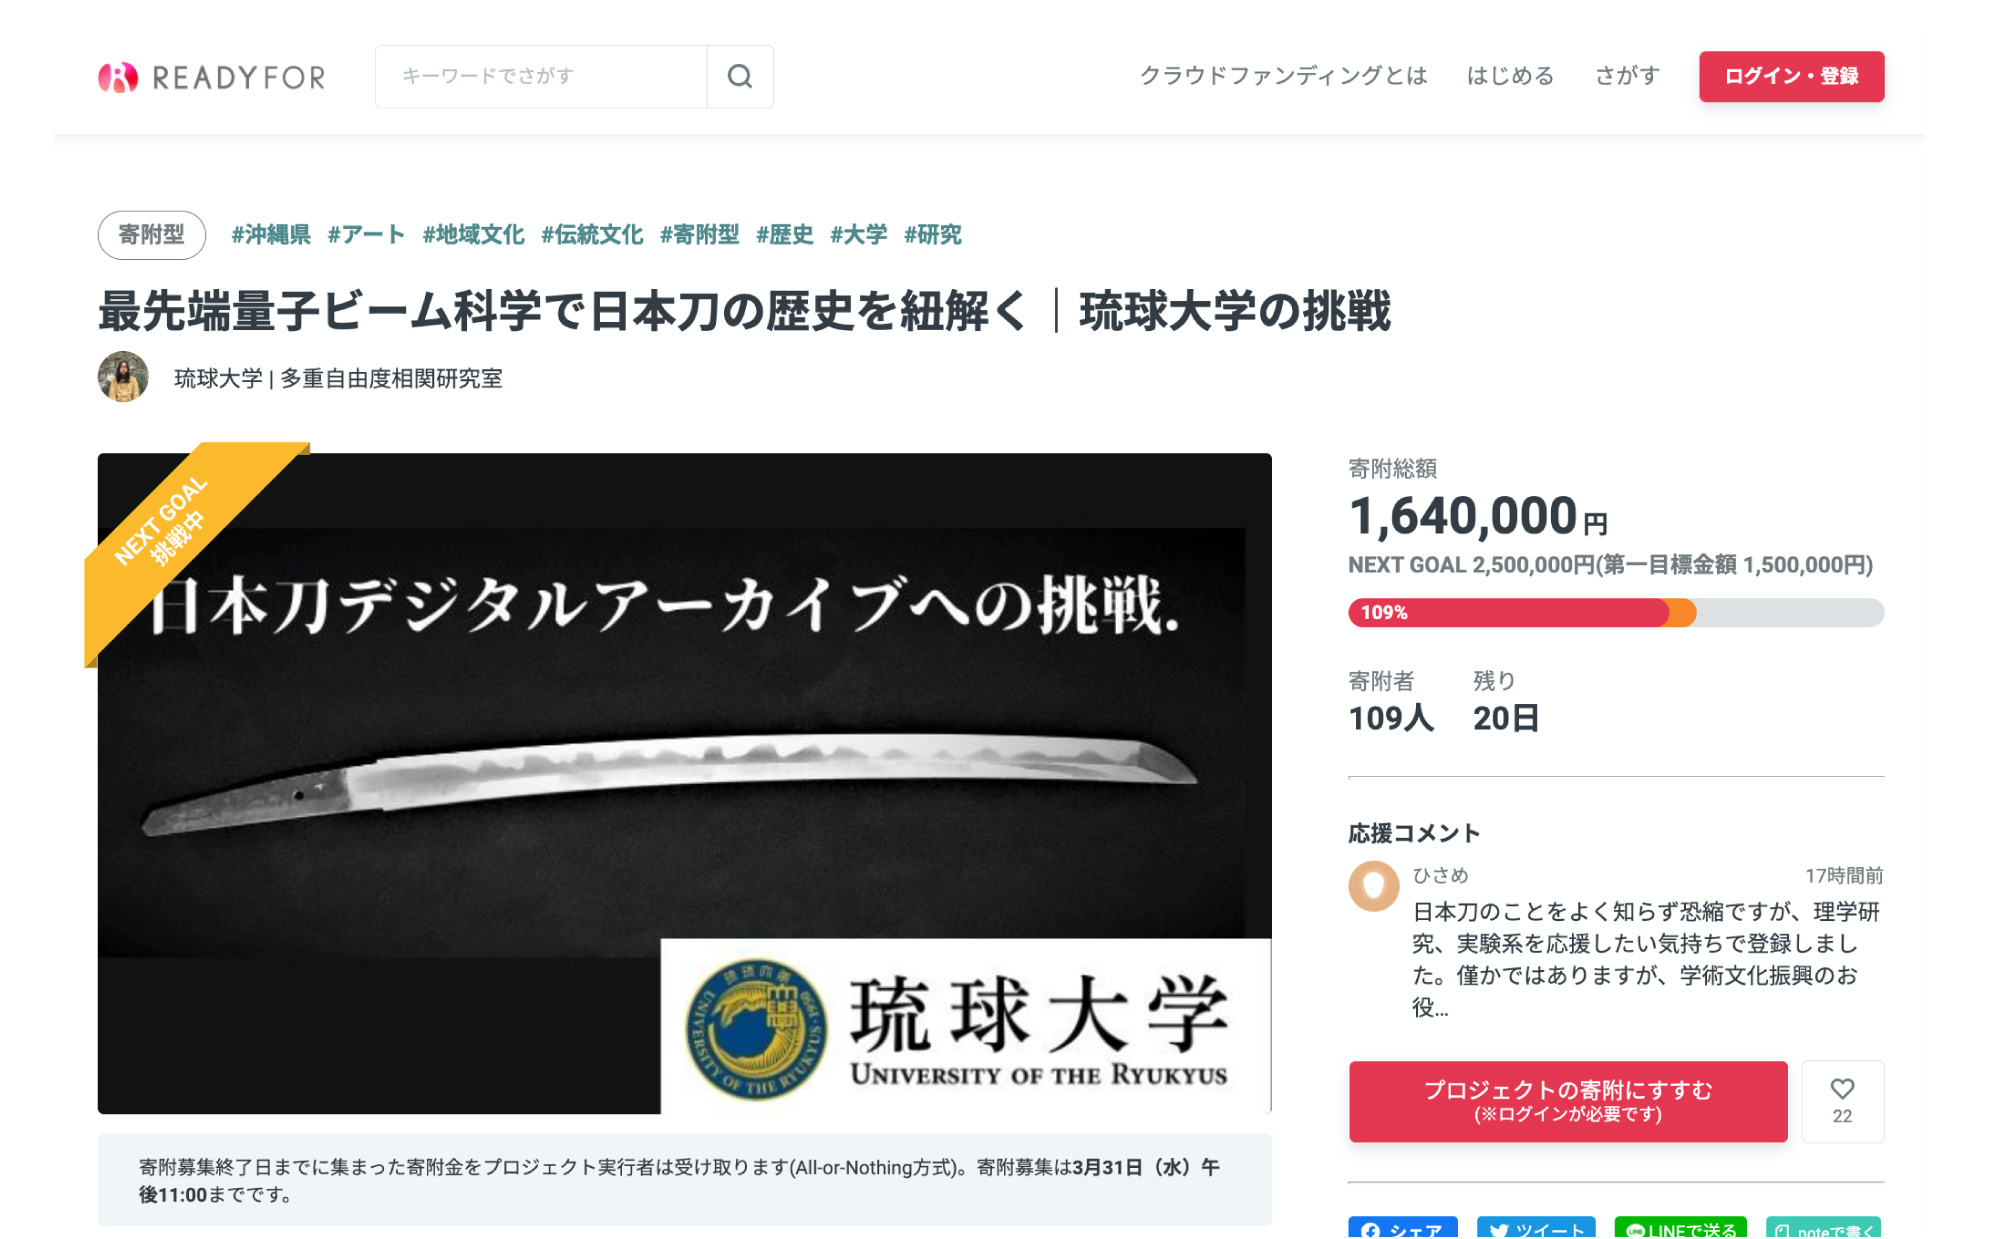 The crowdfunding of University of the Ryukyus